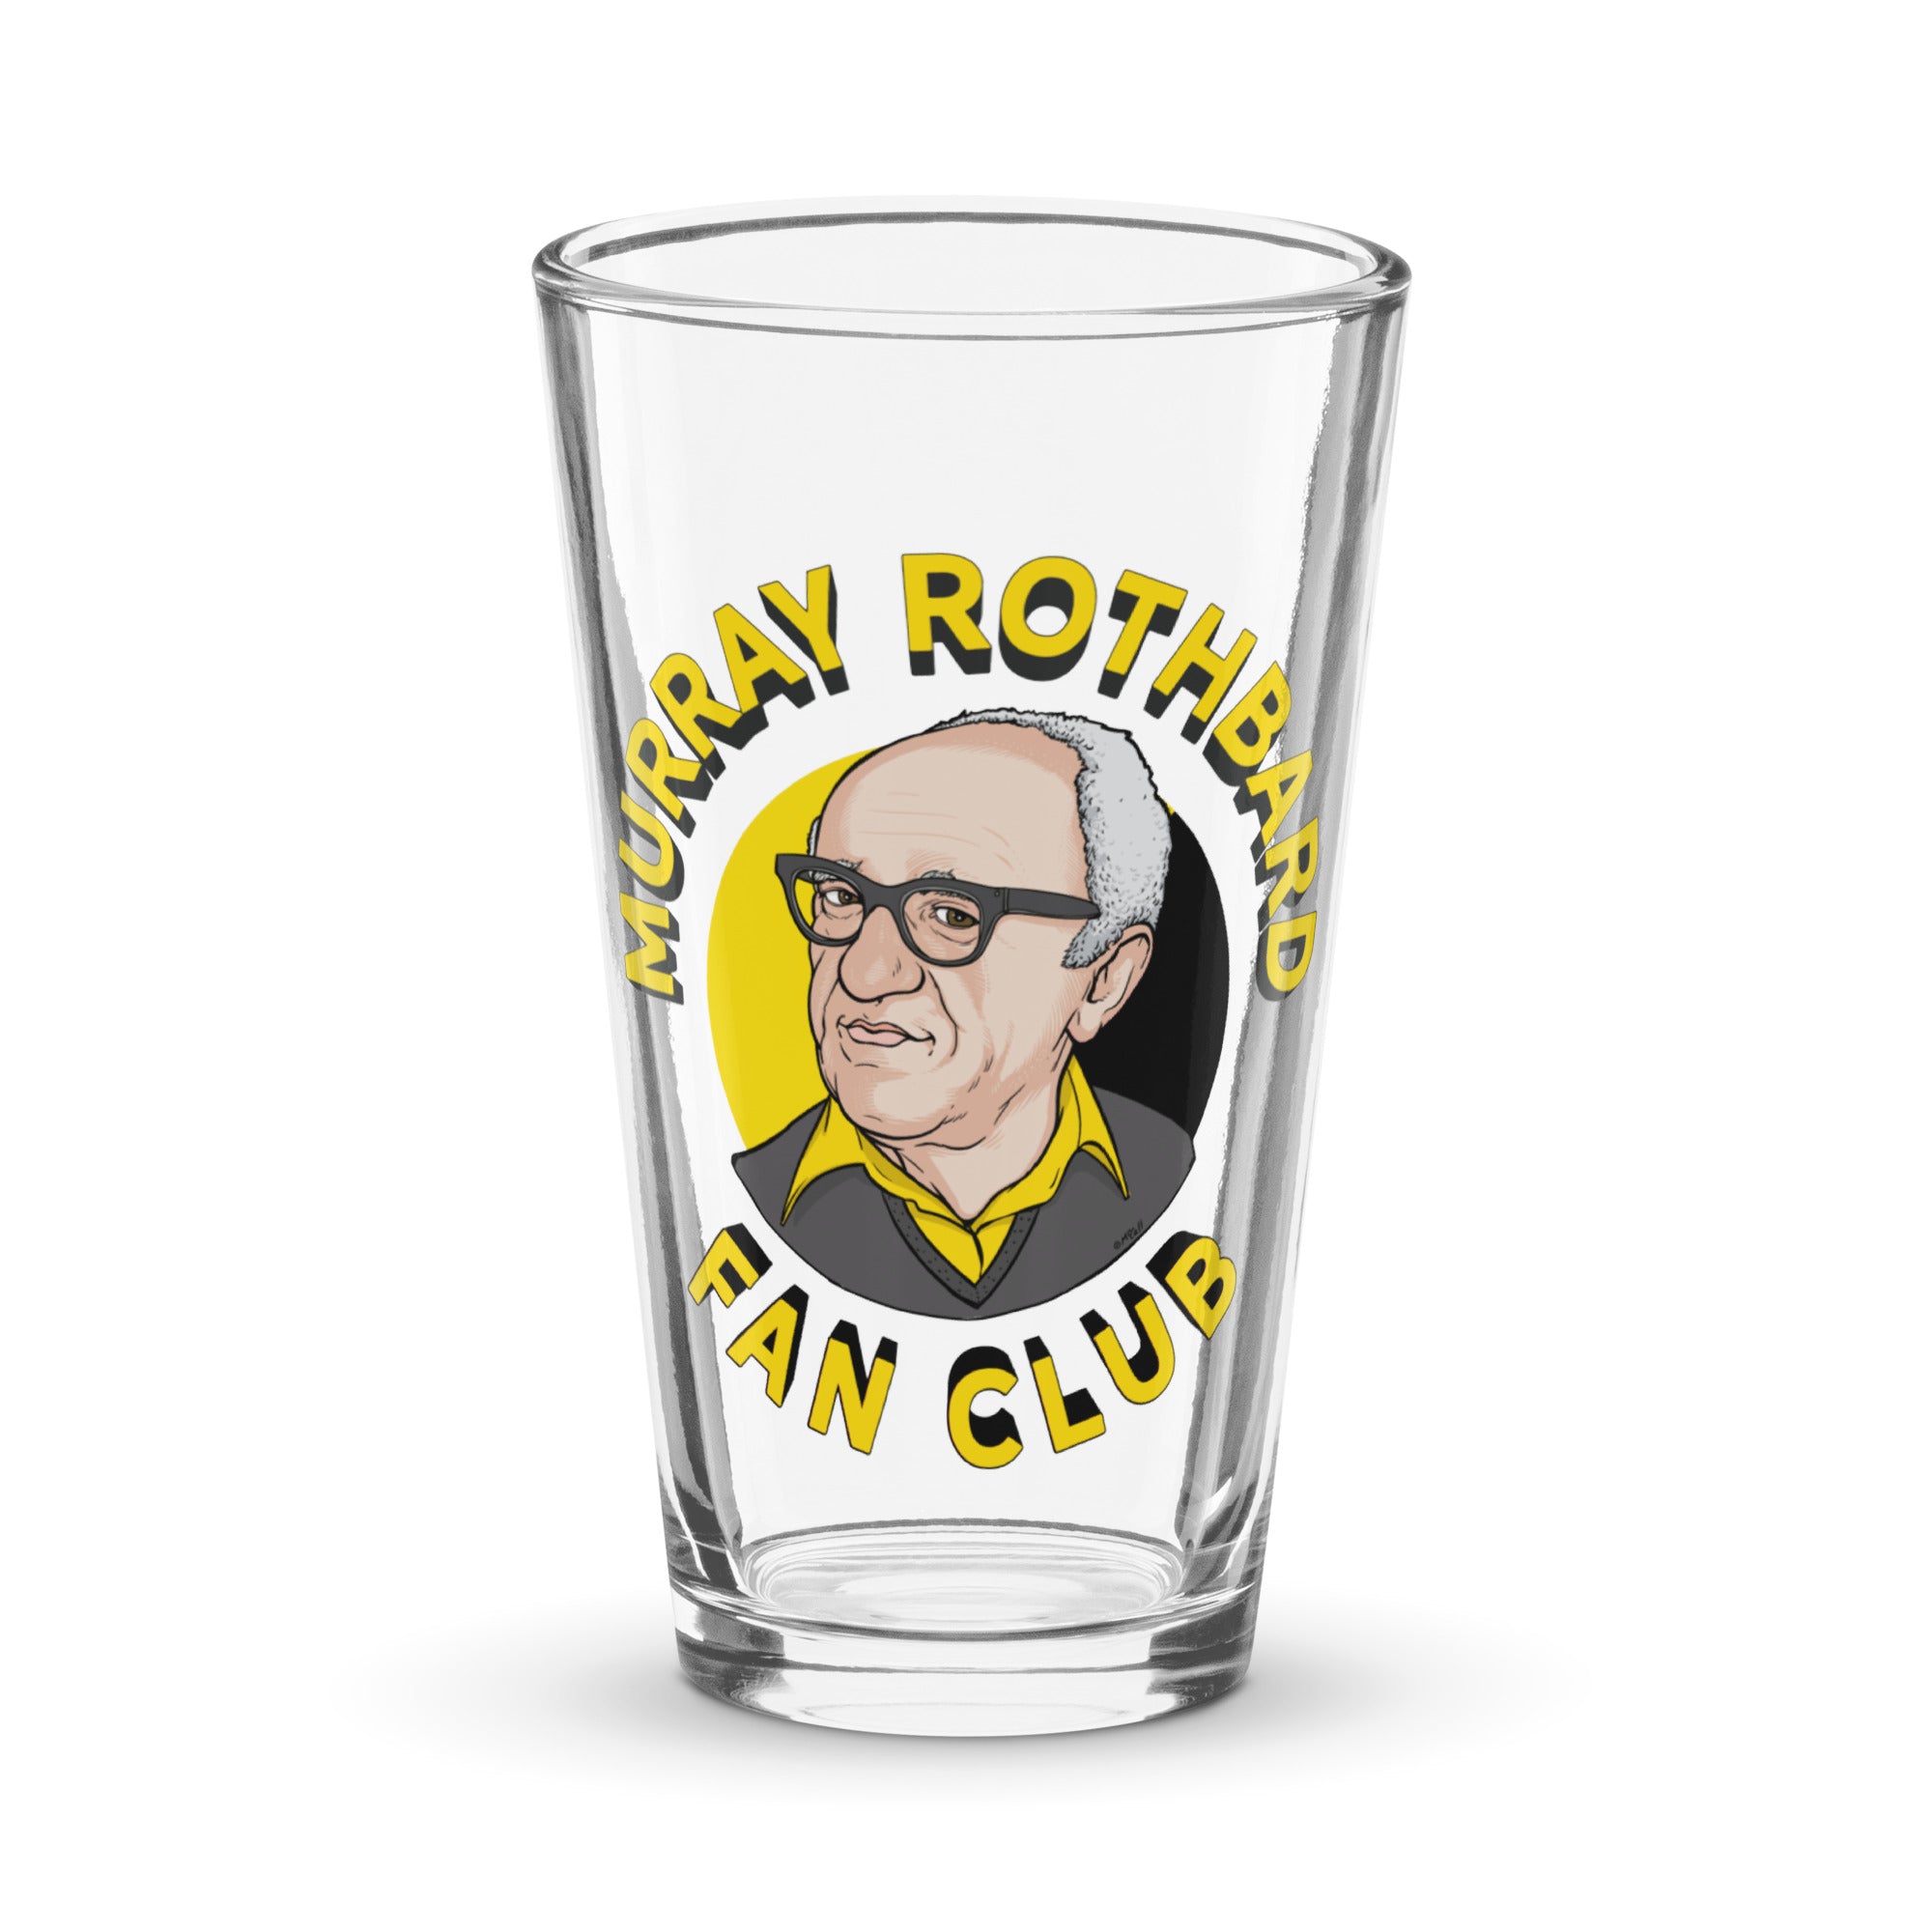 Murray Rothbard Fan Club Pint Glass